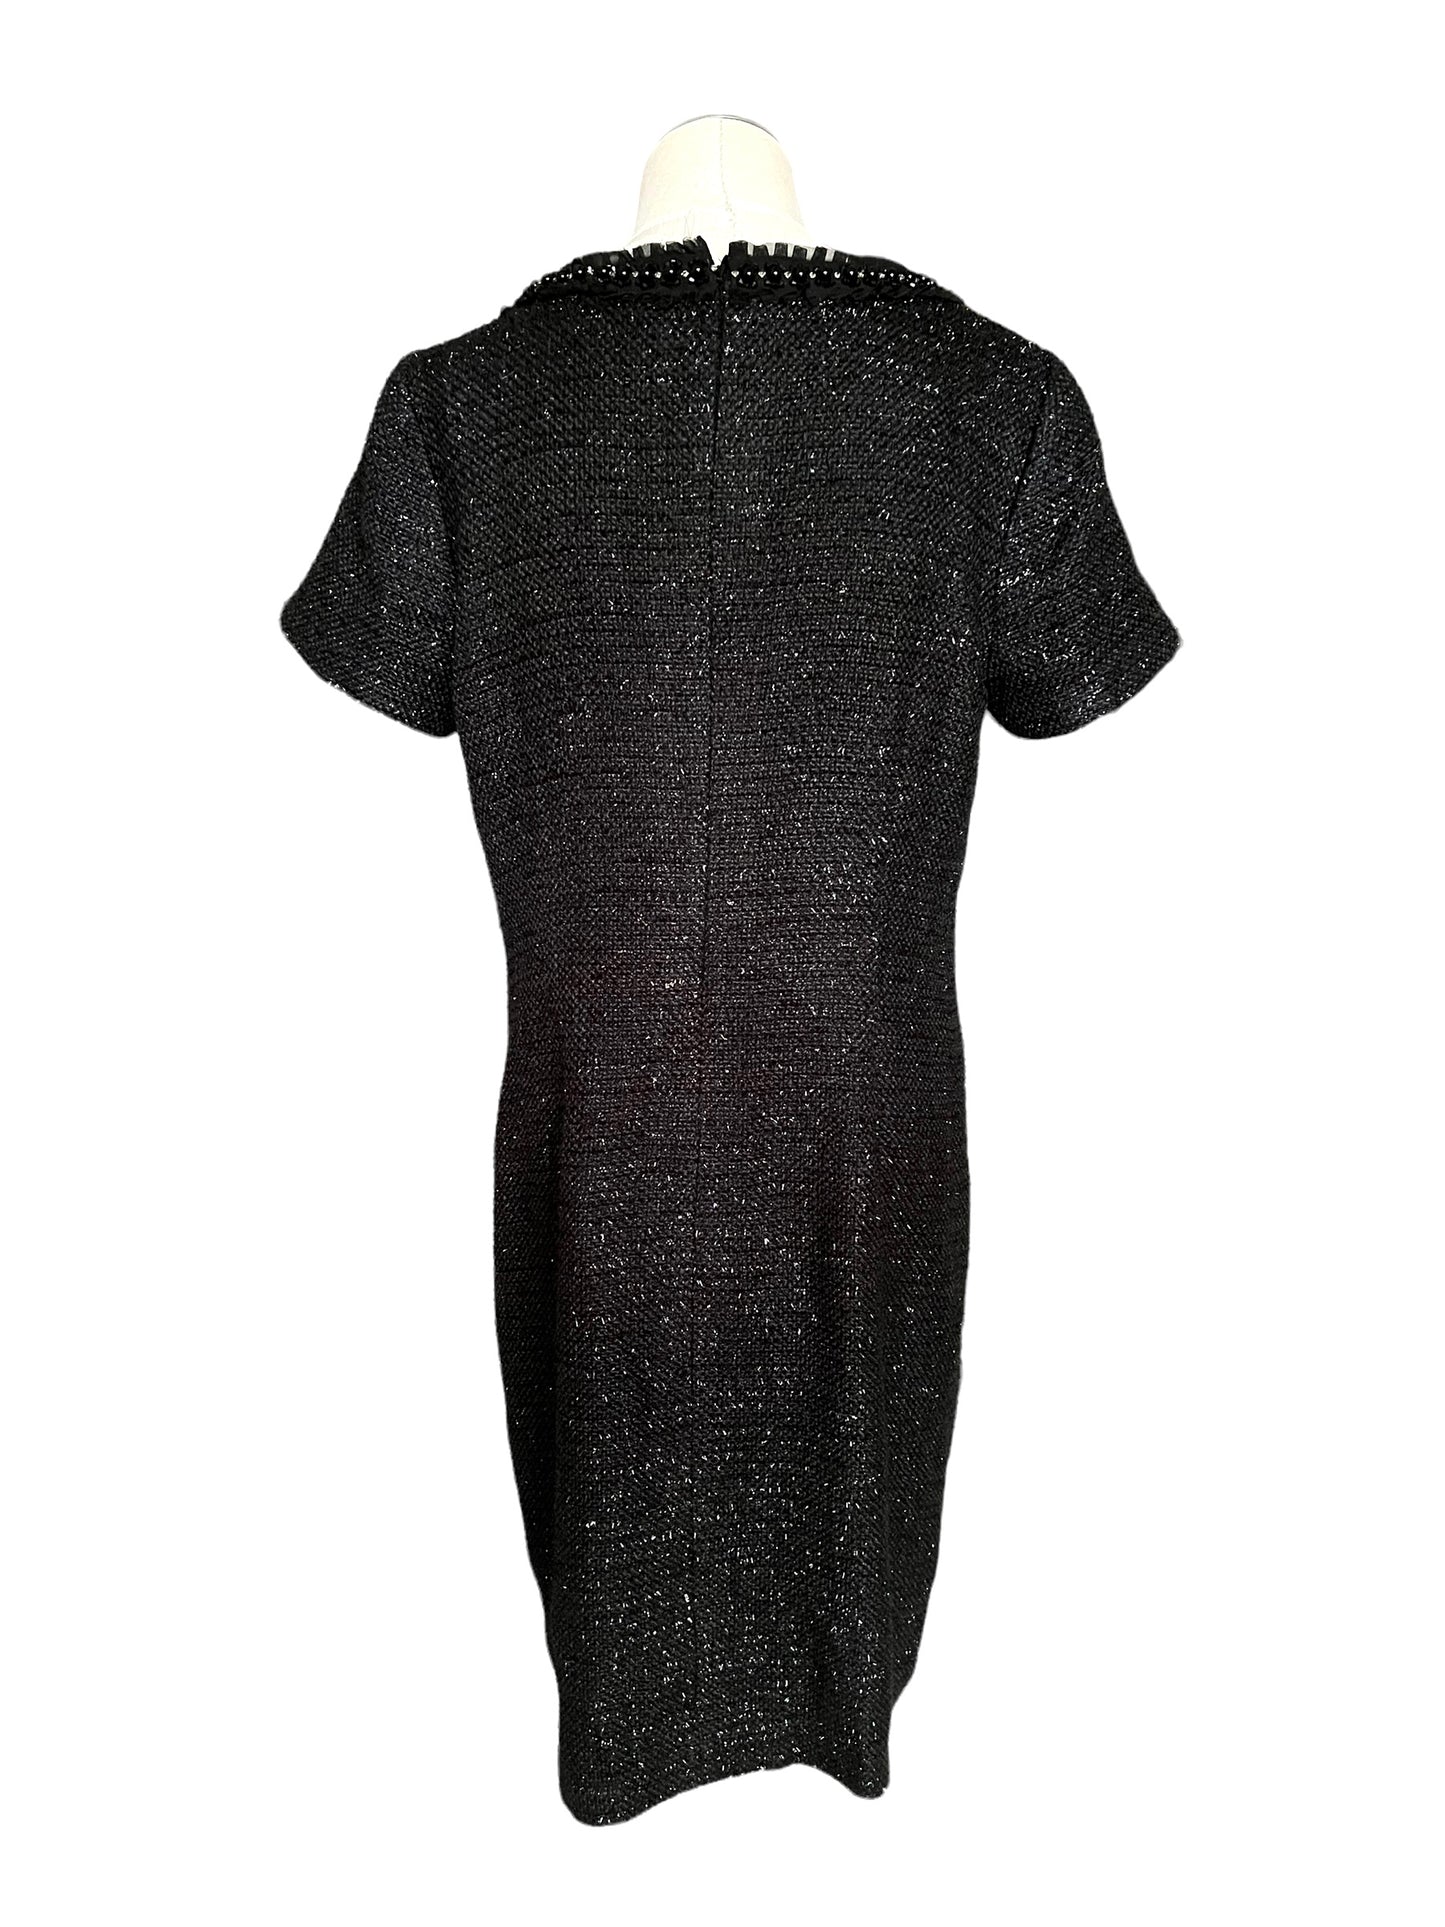 Talbots Size 12 Black Metallic Tweed Dress